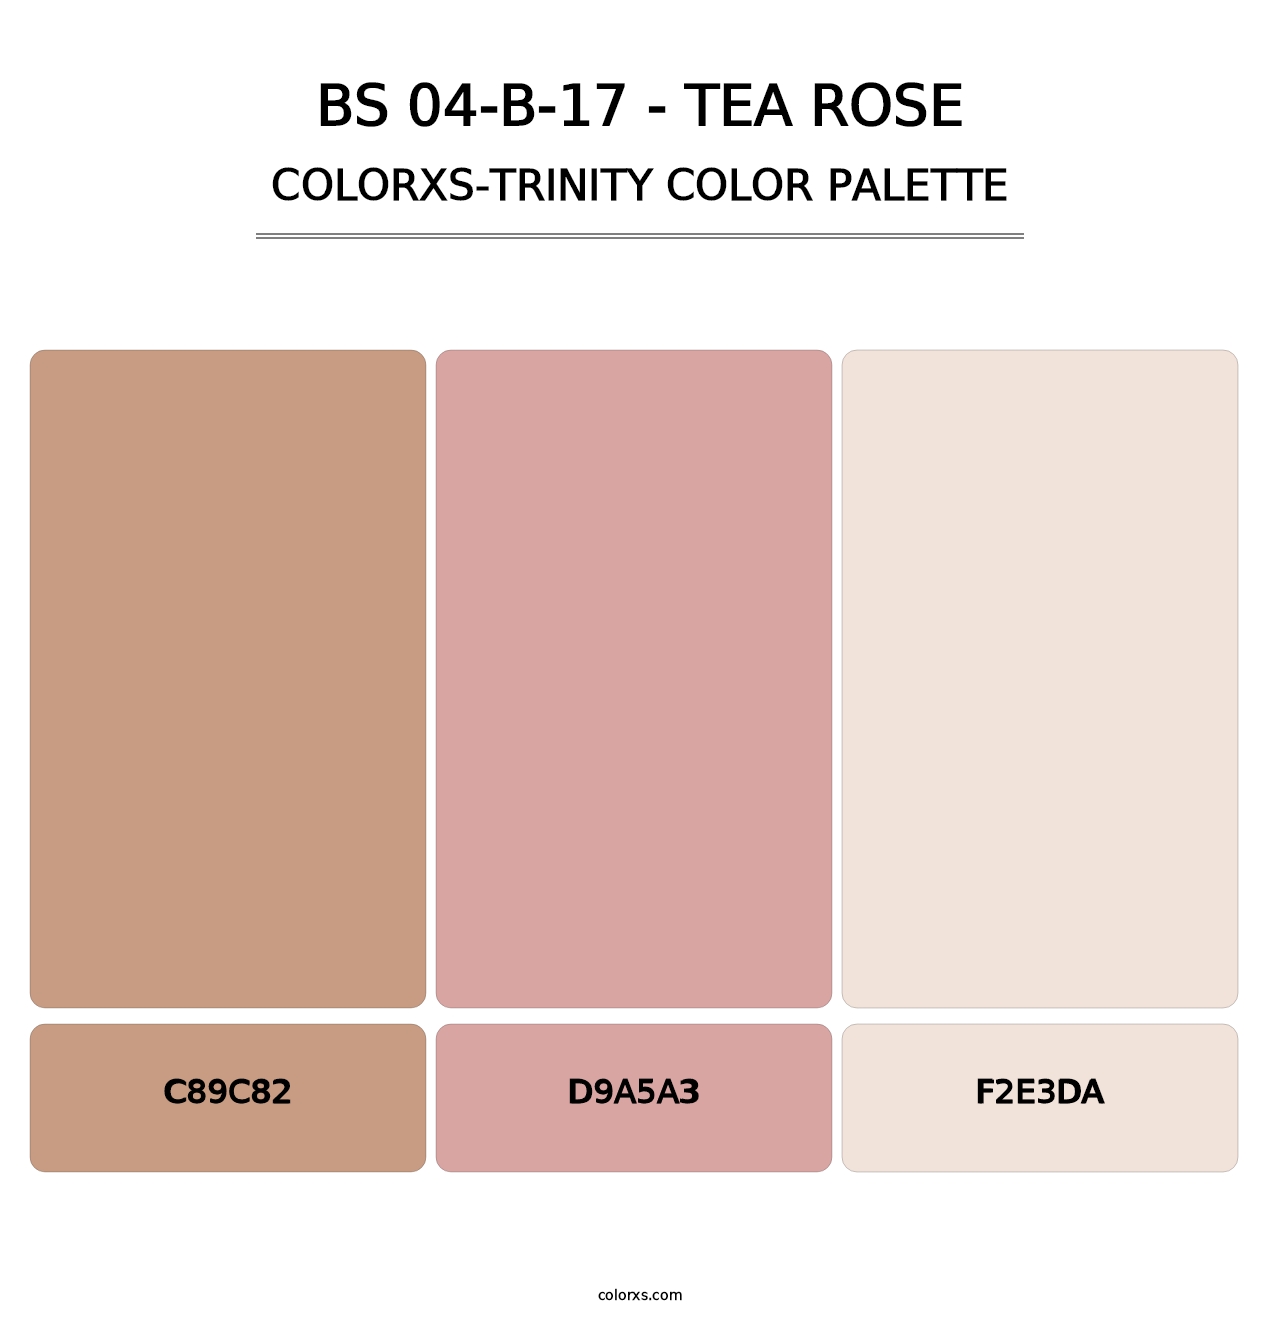 BS 04-B-17 - Tea Rose - Colorxs Trinity Palette